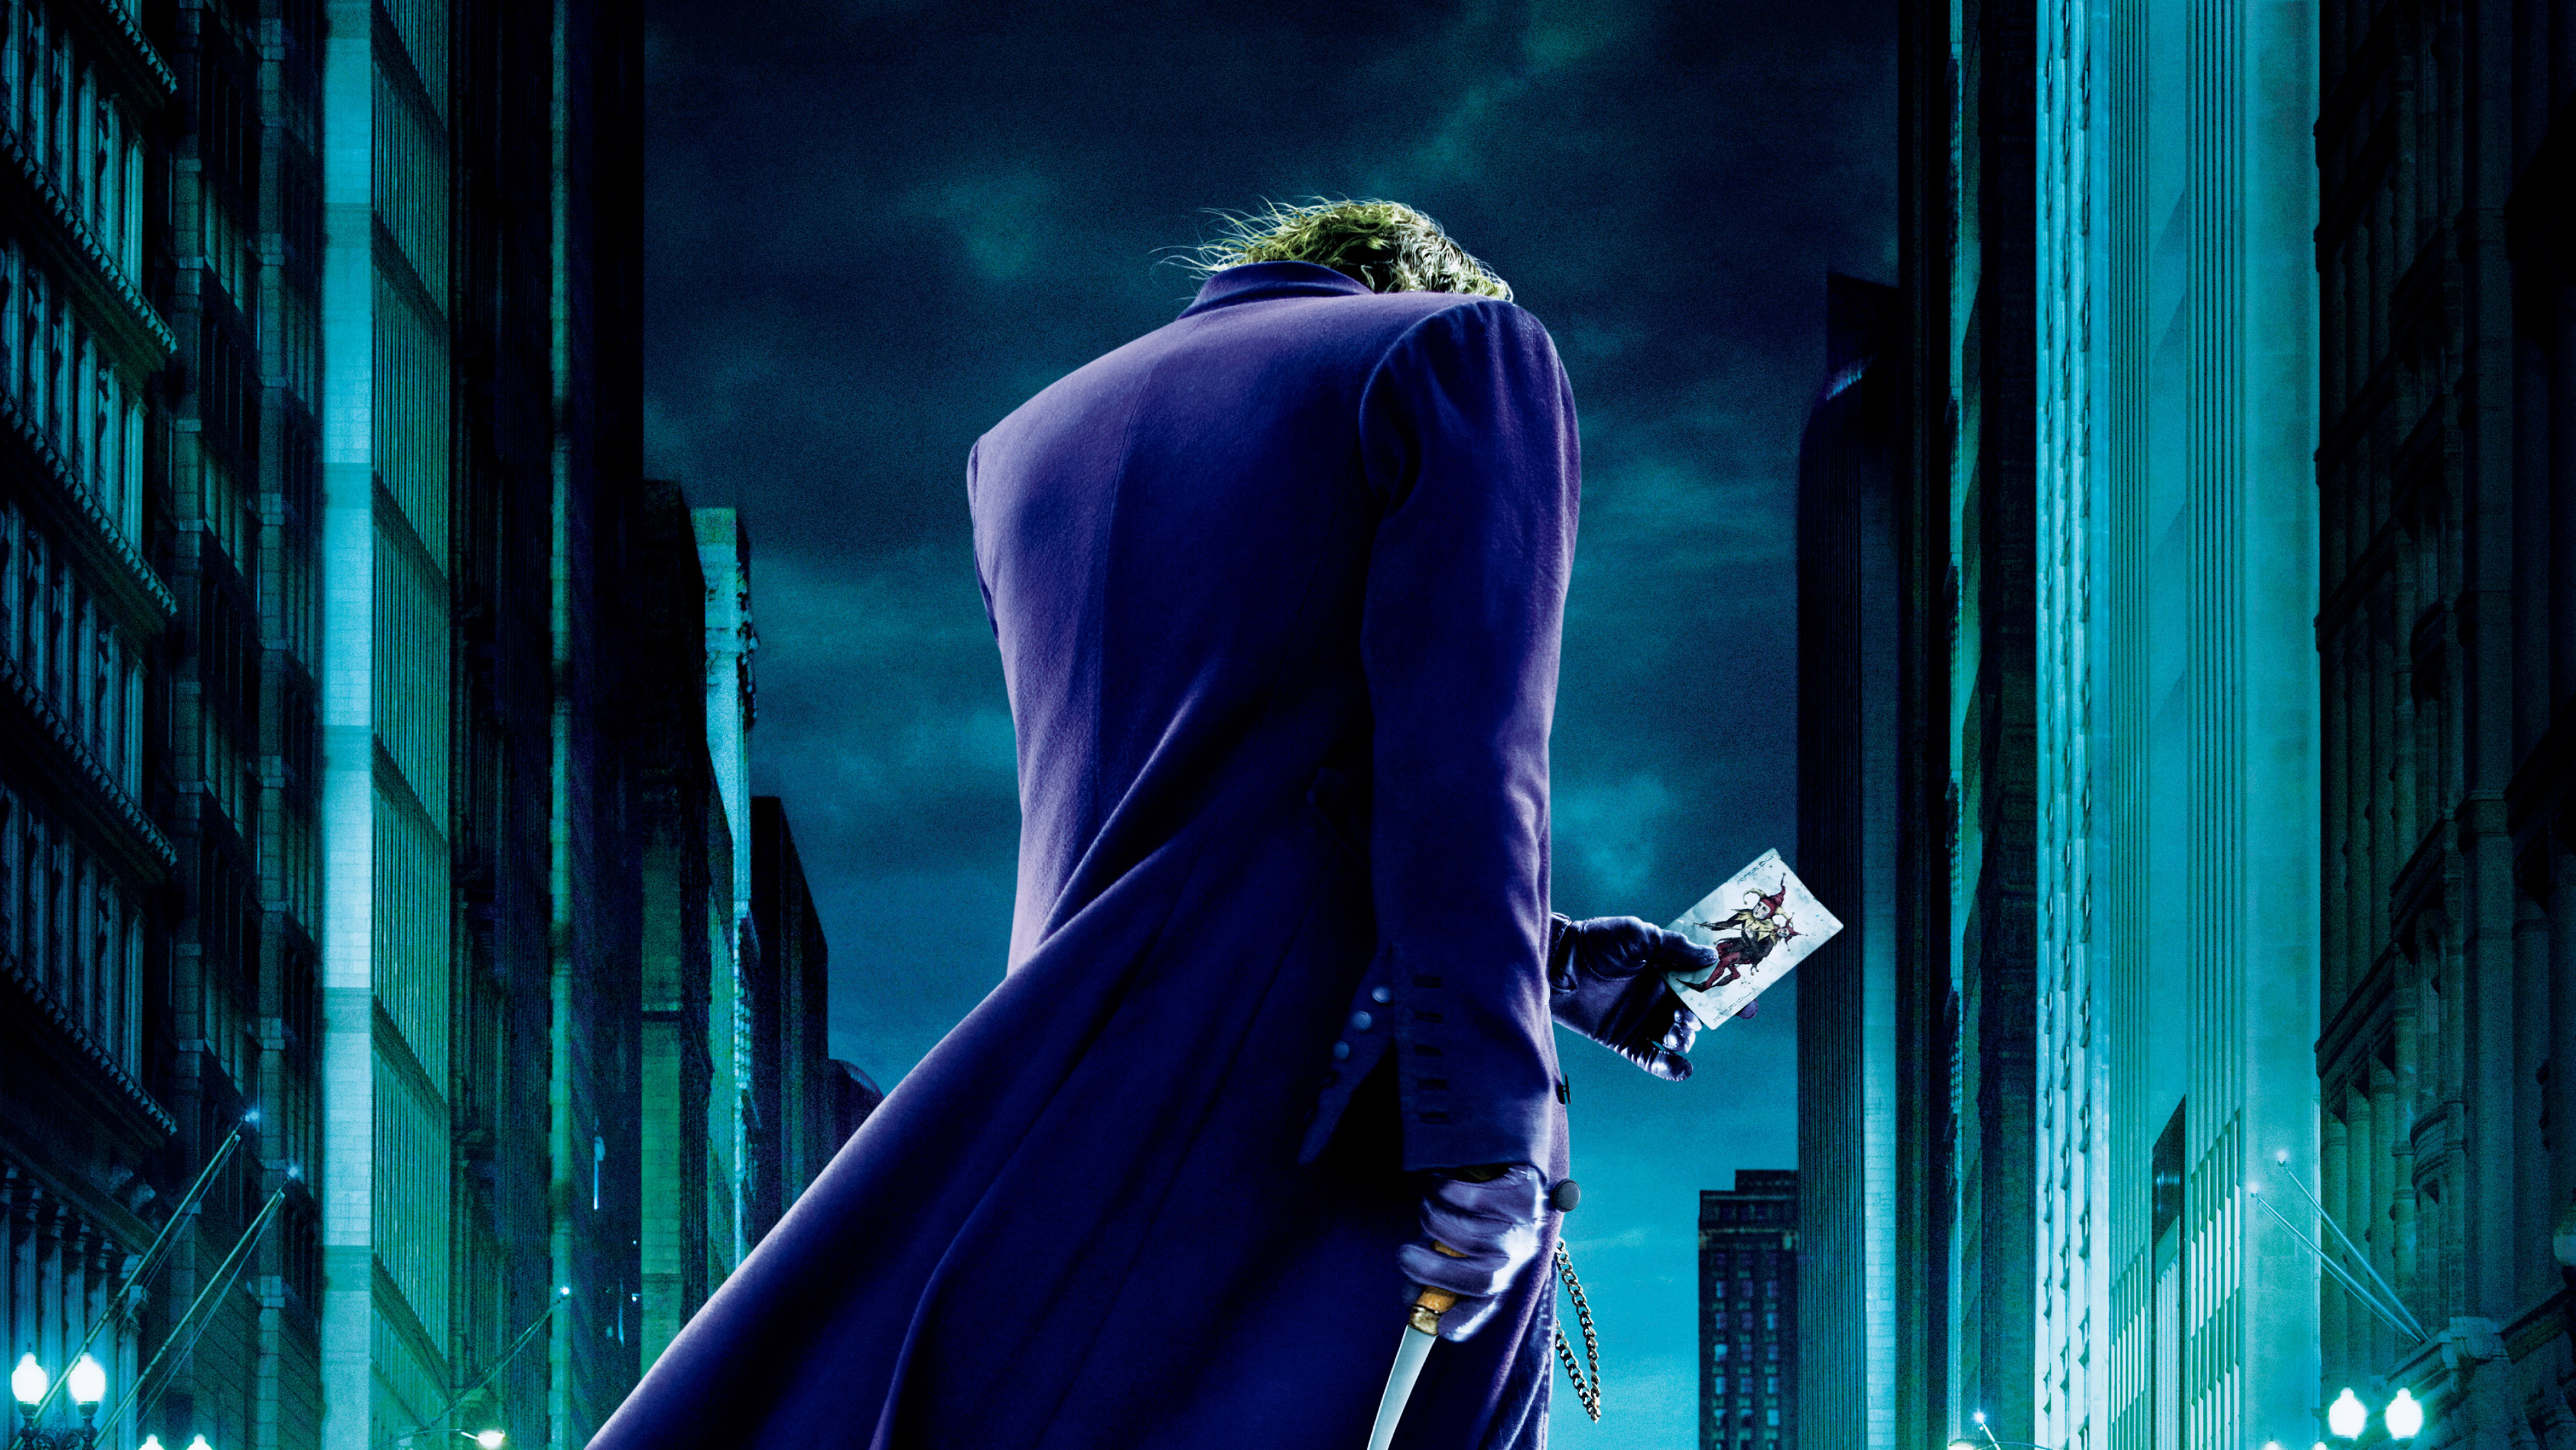 Joker The Dark Knight 4K Wallpaper,Hd Movies Wallpapers,4K Wallpapers